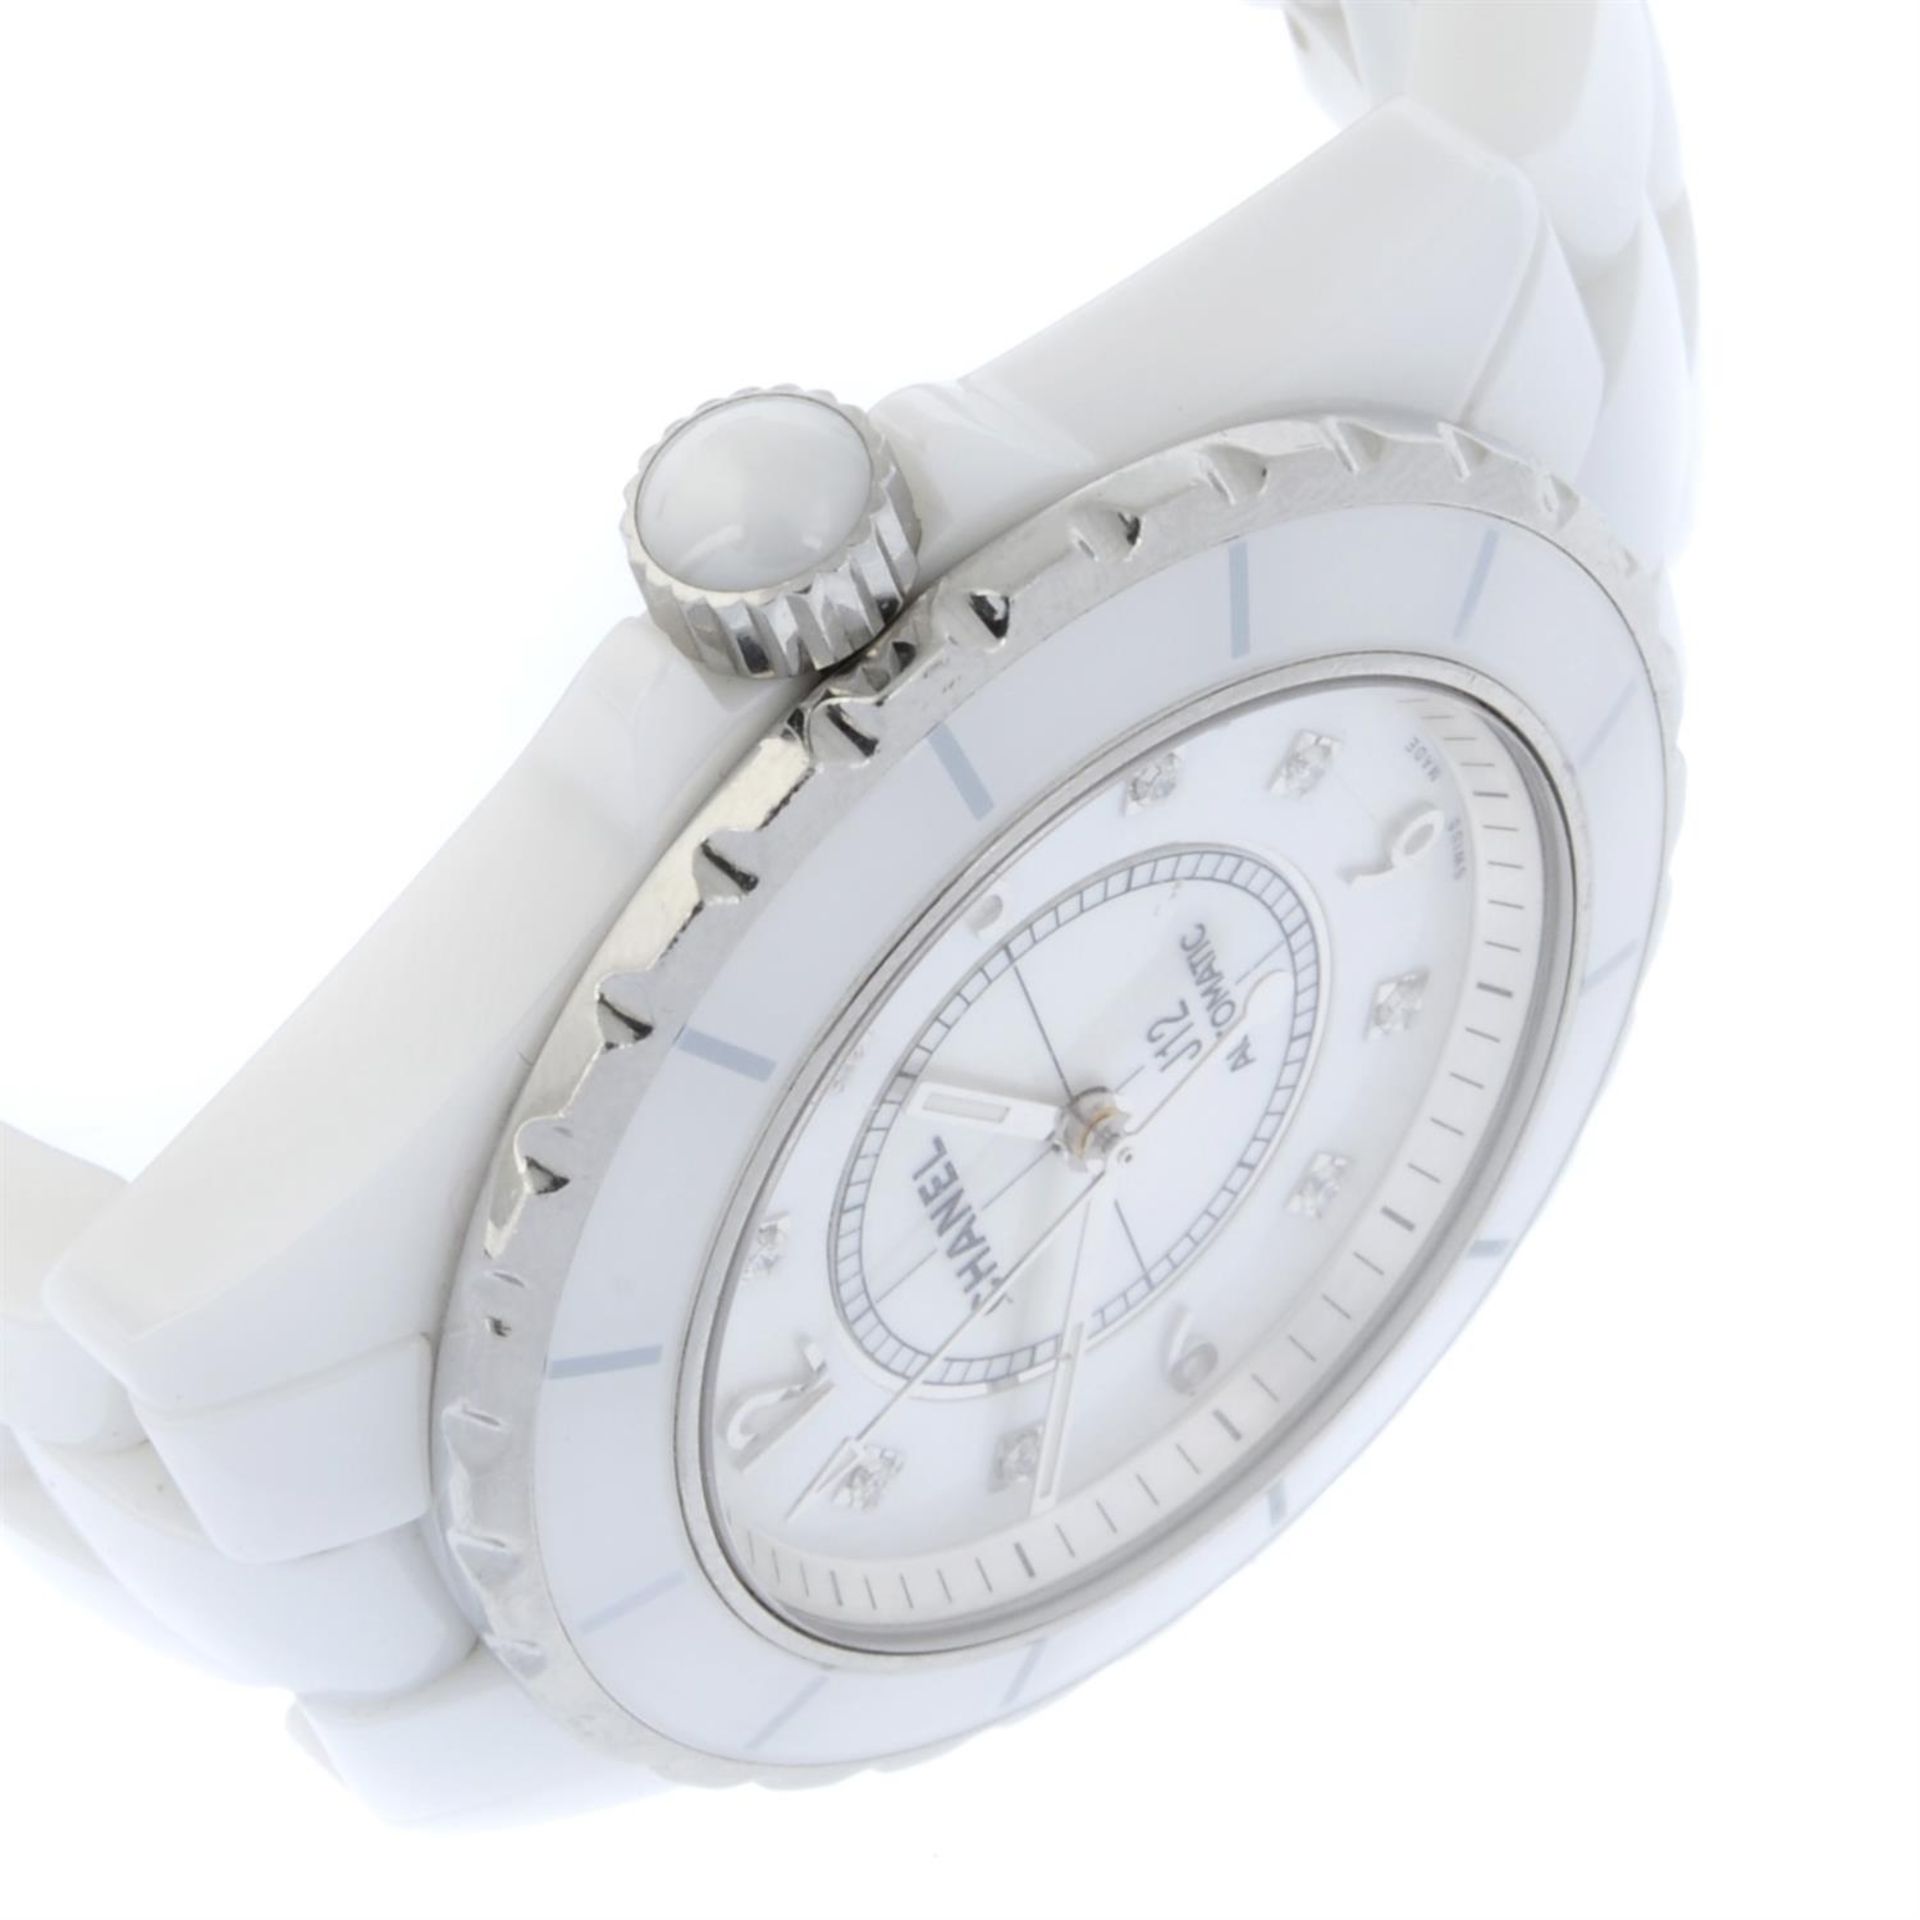 CHANEL - a ceramic J12 bracelet watch, 37mm. - Bild 3 aus 6